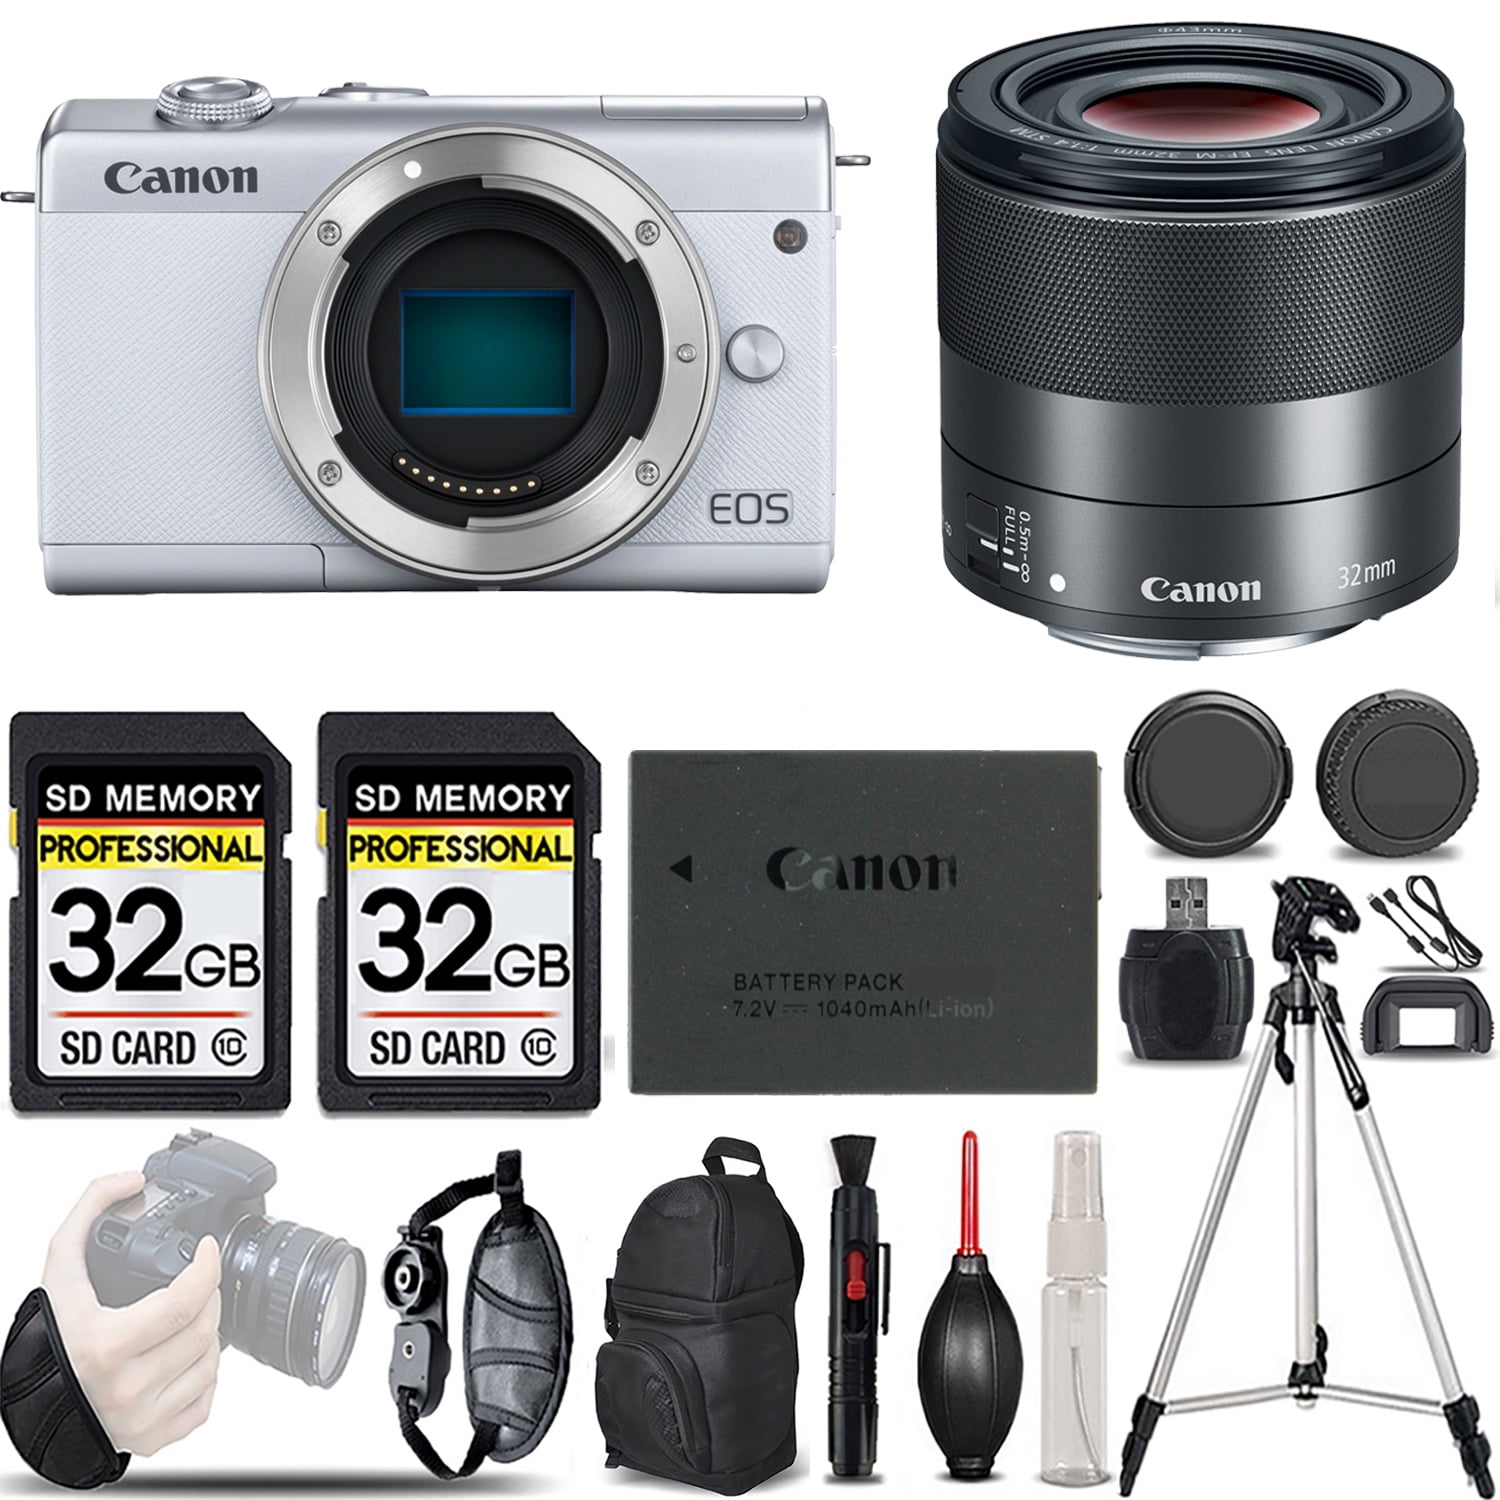 Canon EOS M200 Mirrorless Camera (White) +32mm f/1.4 STM Lens -LOADED KIT 